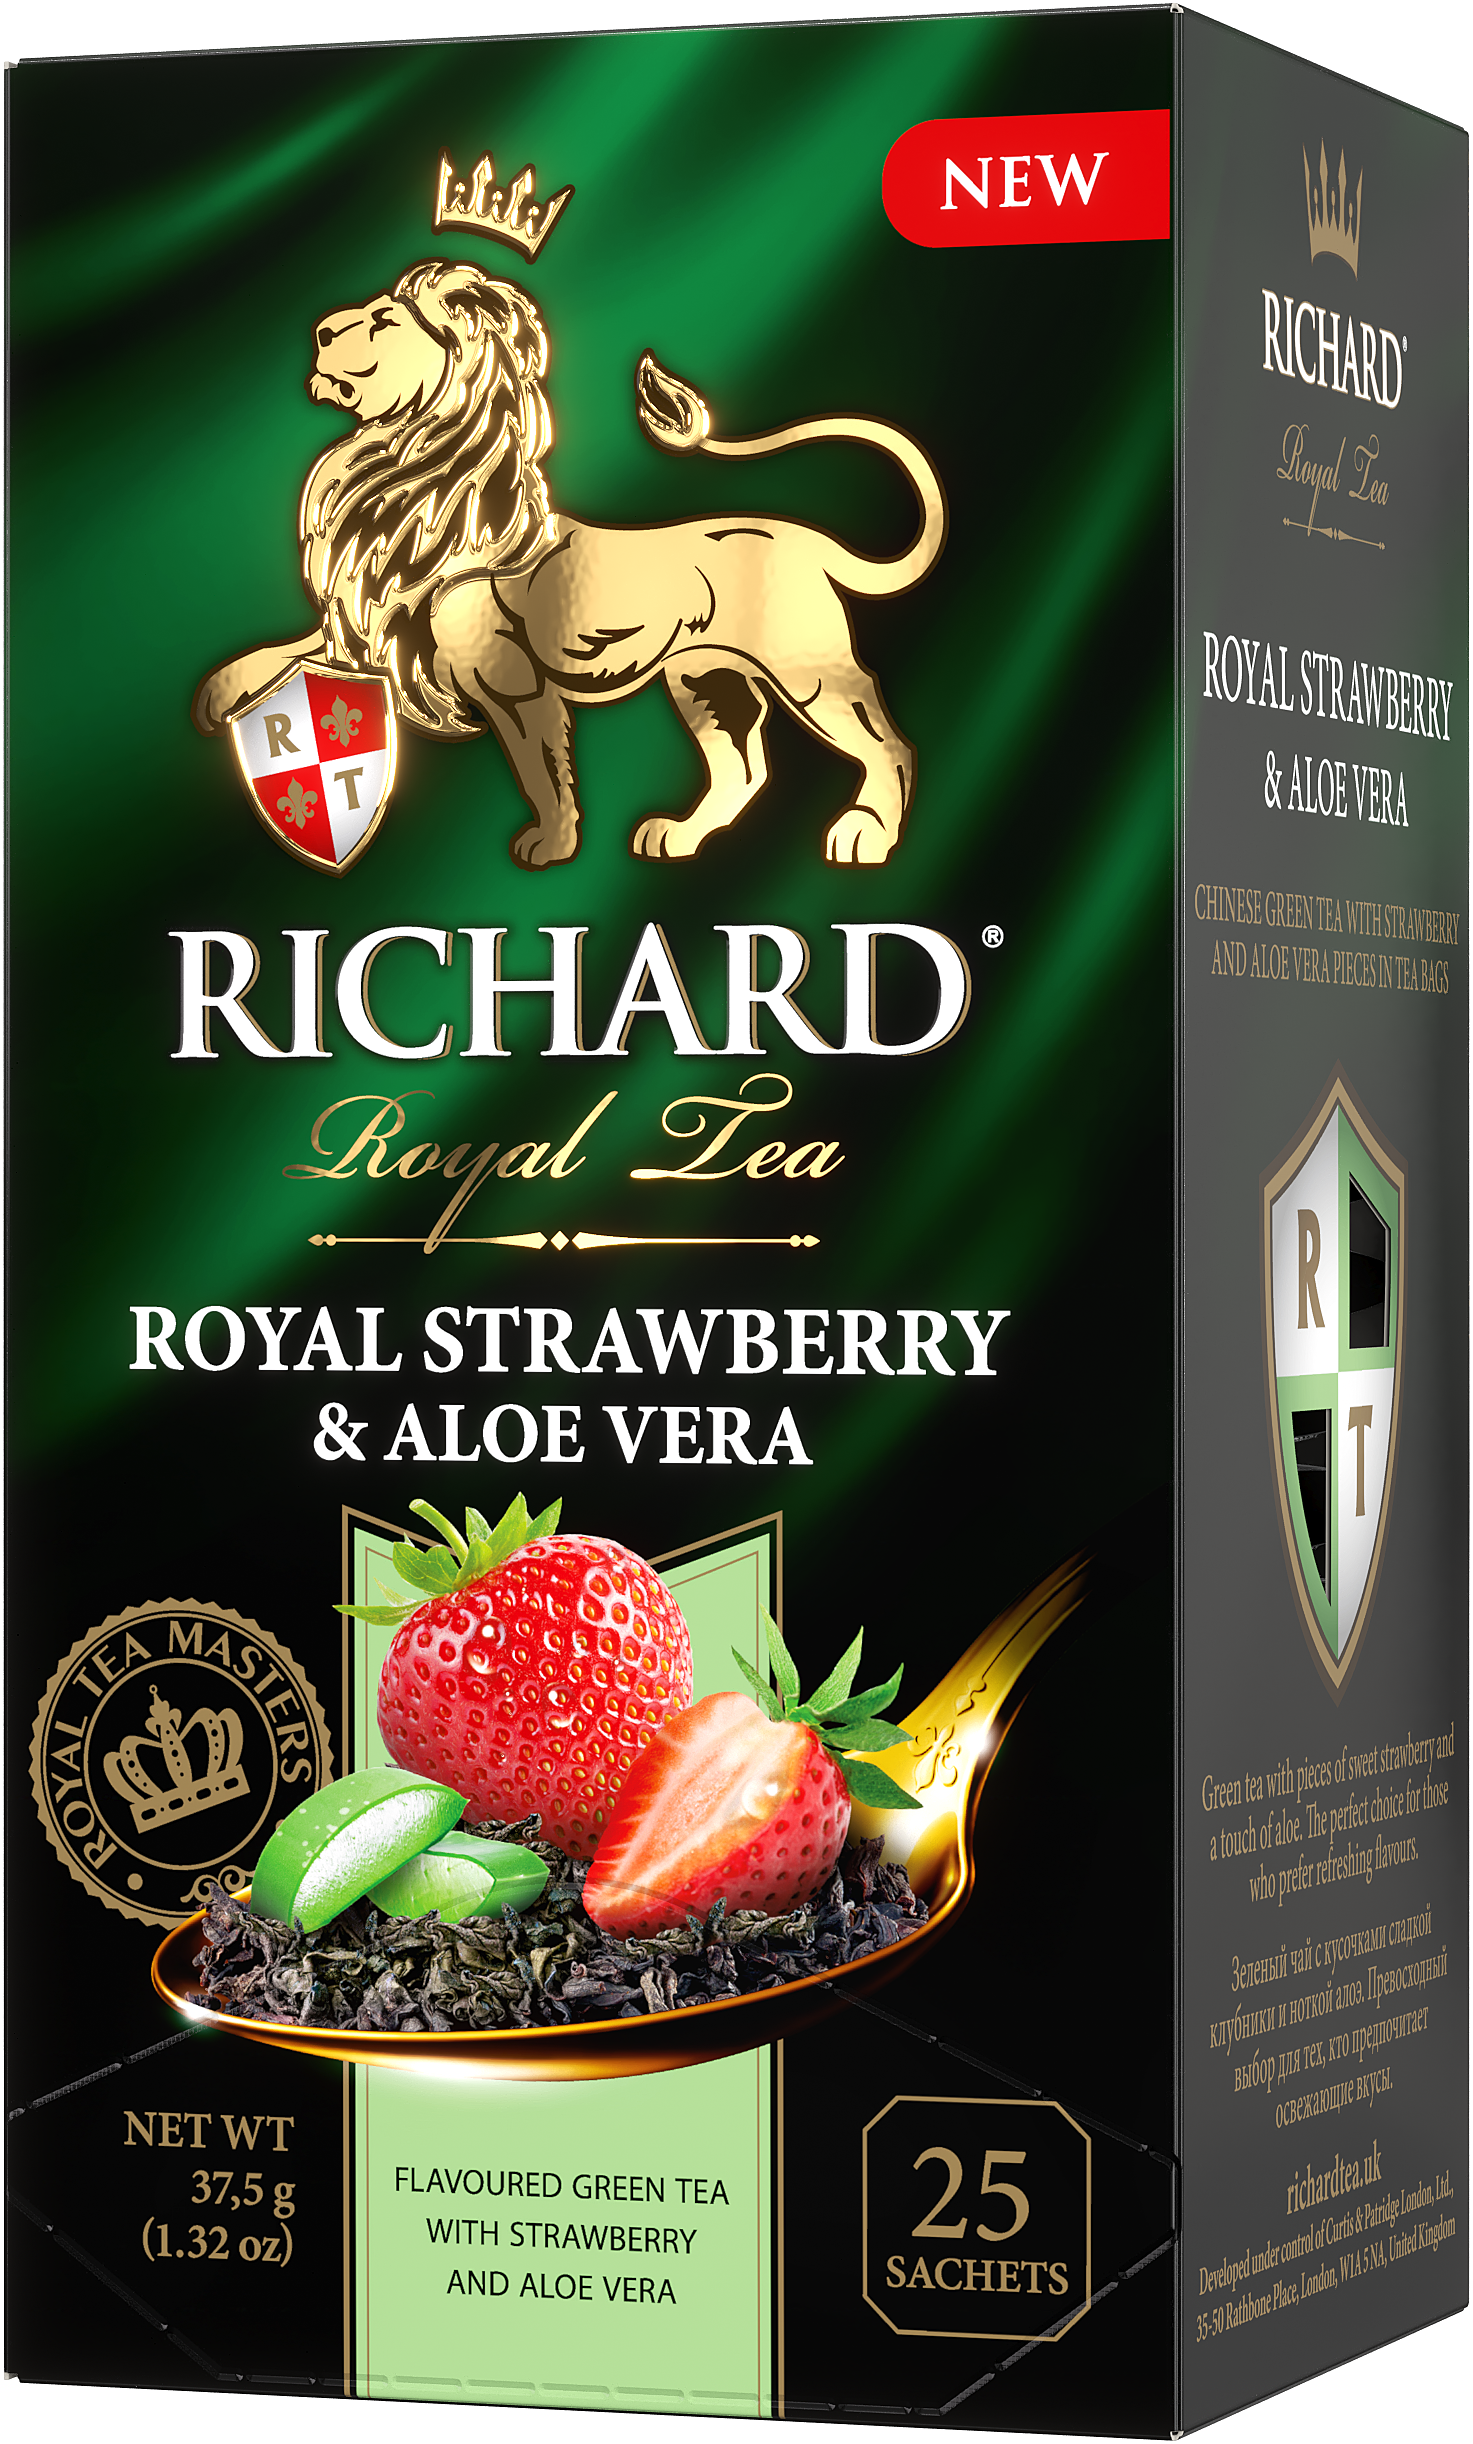 Richard Royal Strawberry & Aloe Vera flavoured green tea